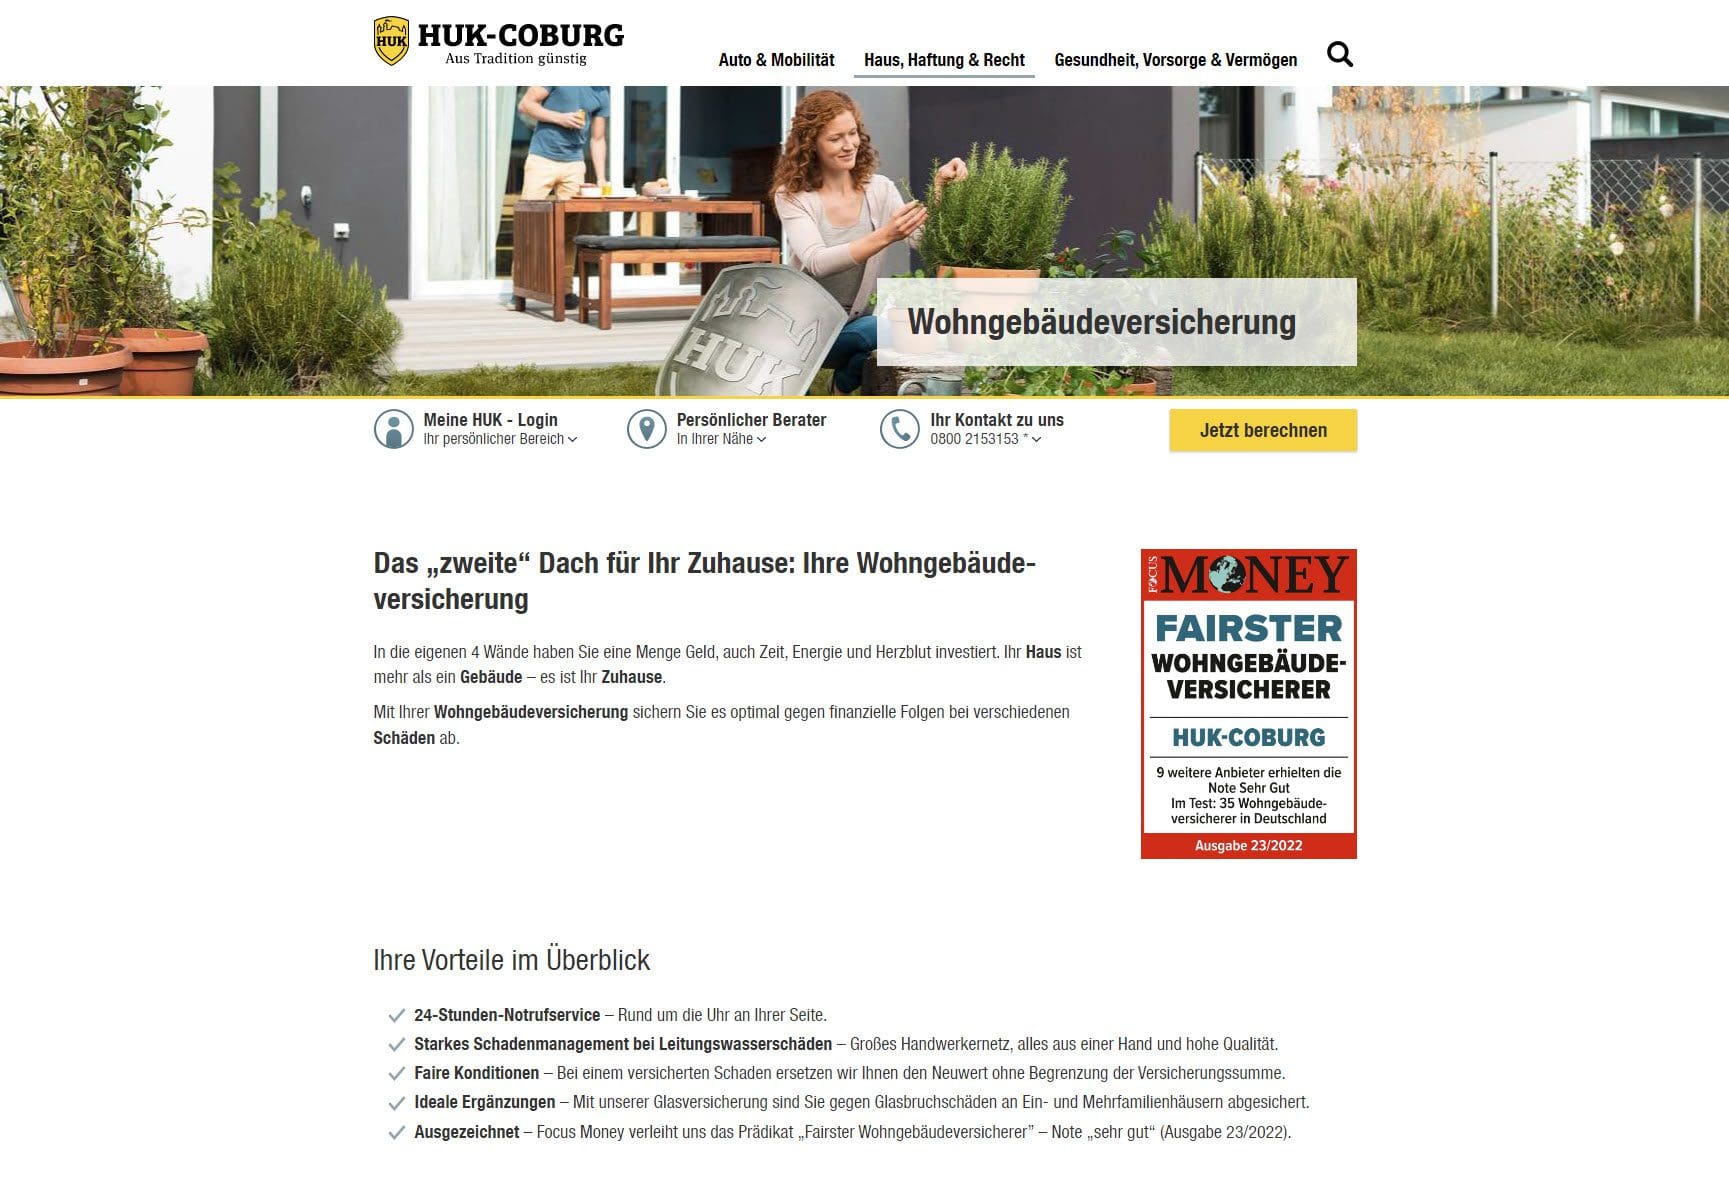 HUK Gebäudeversicherung zahlt nicht? - Wir helfen! (Screenshot huk.de/haus-haftung-recht/haus-wohnung/wohngebaeudeversicherung.html am 19.08.2022)